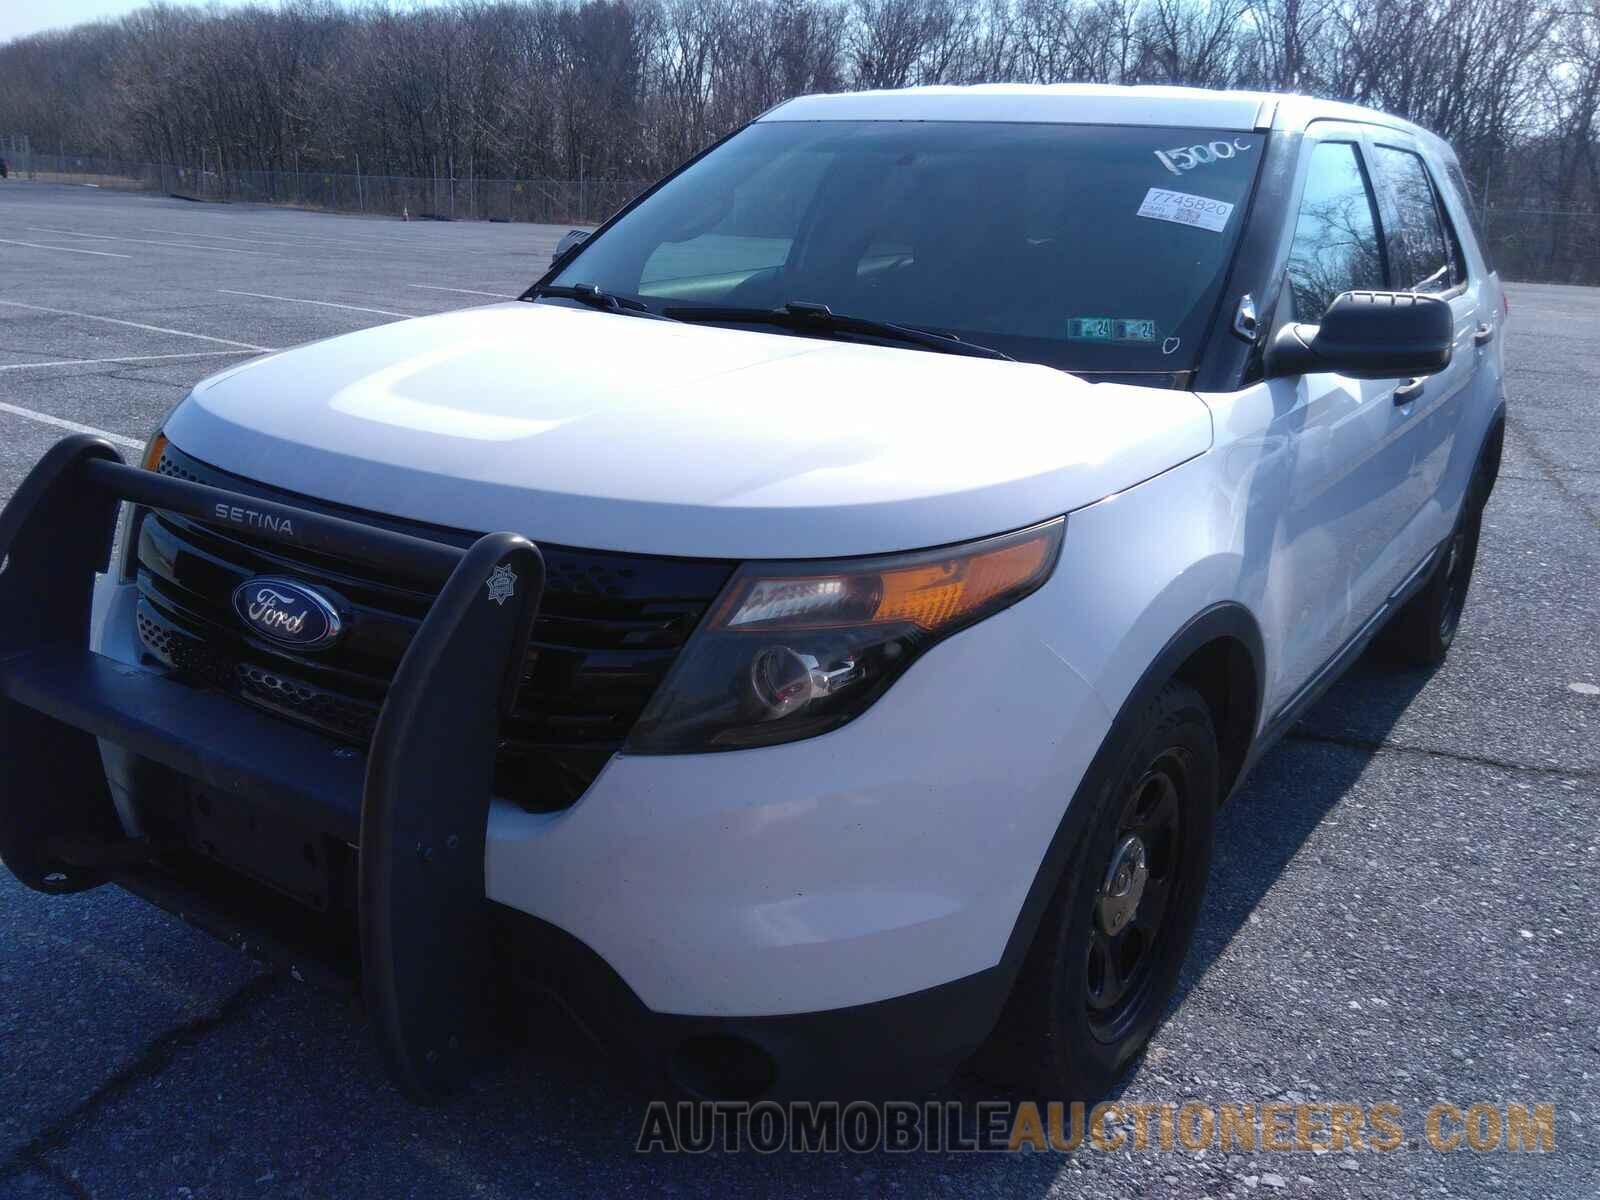 1FM5K8ARXFGC17451 Ford Police Interceptor 2015